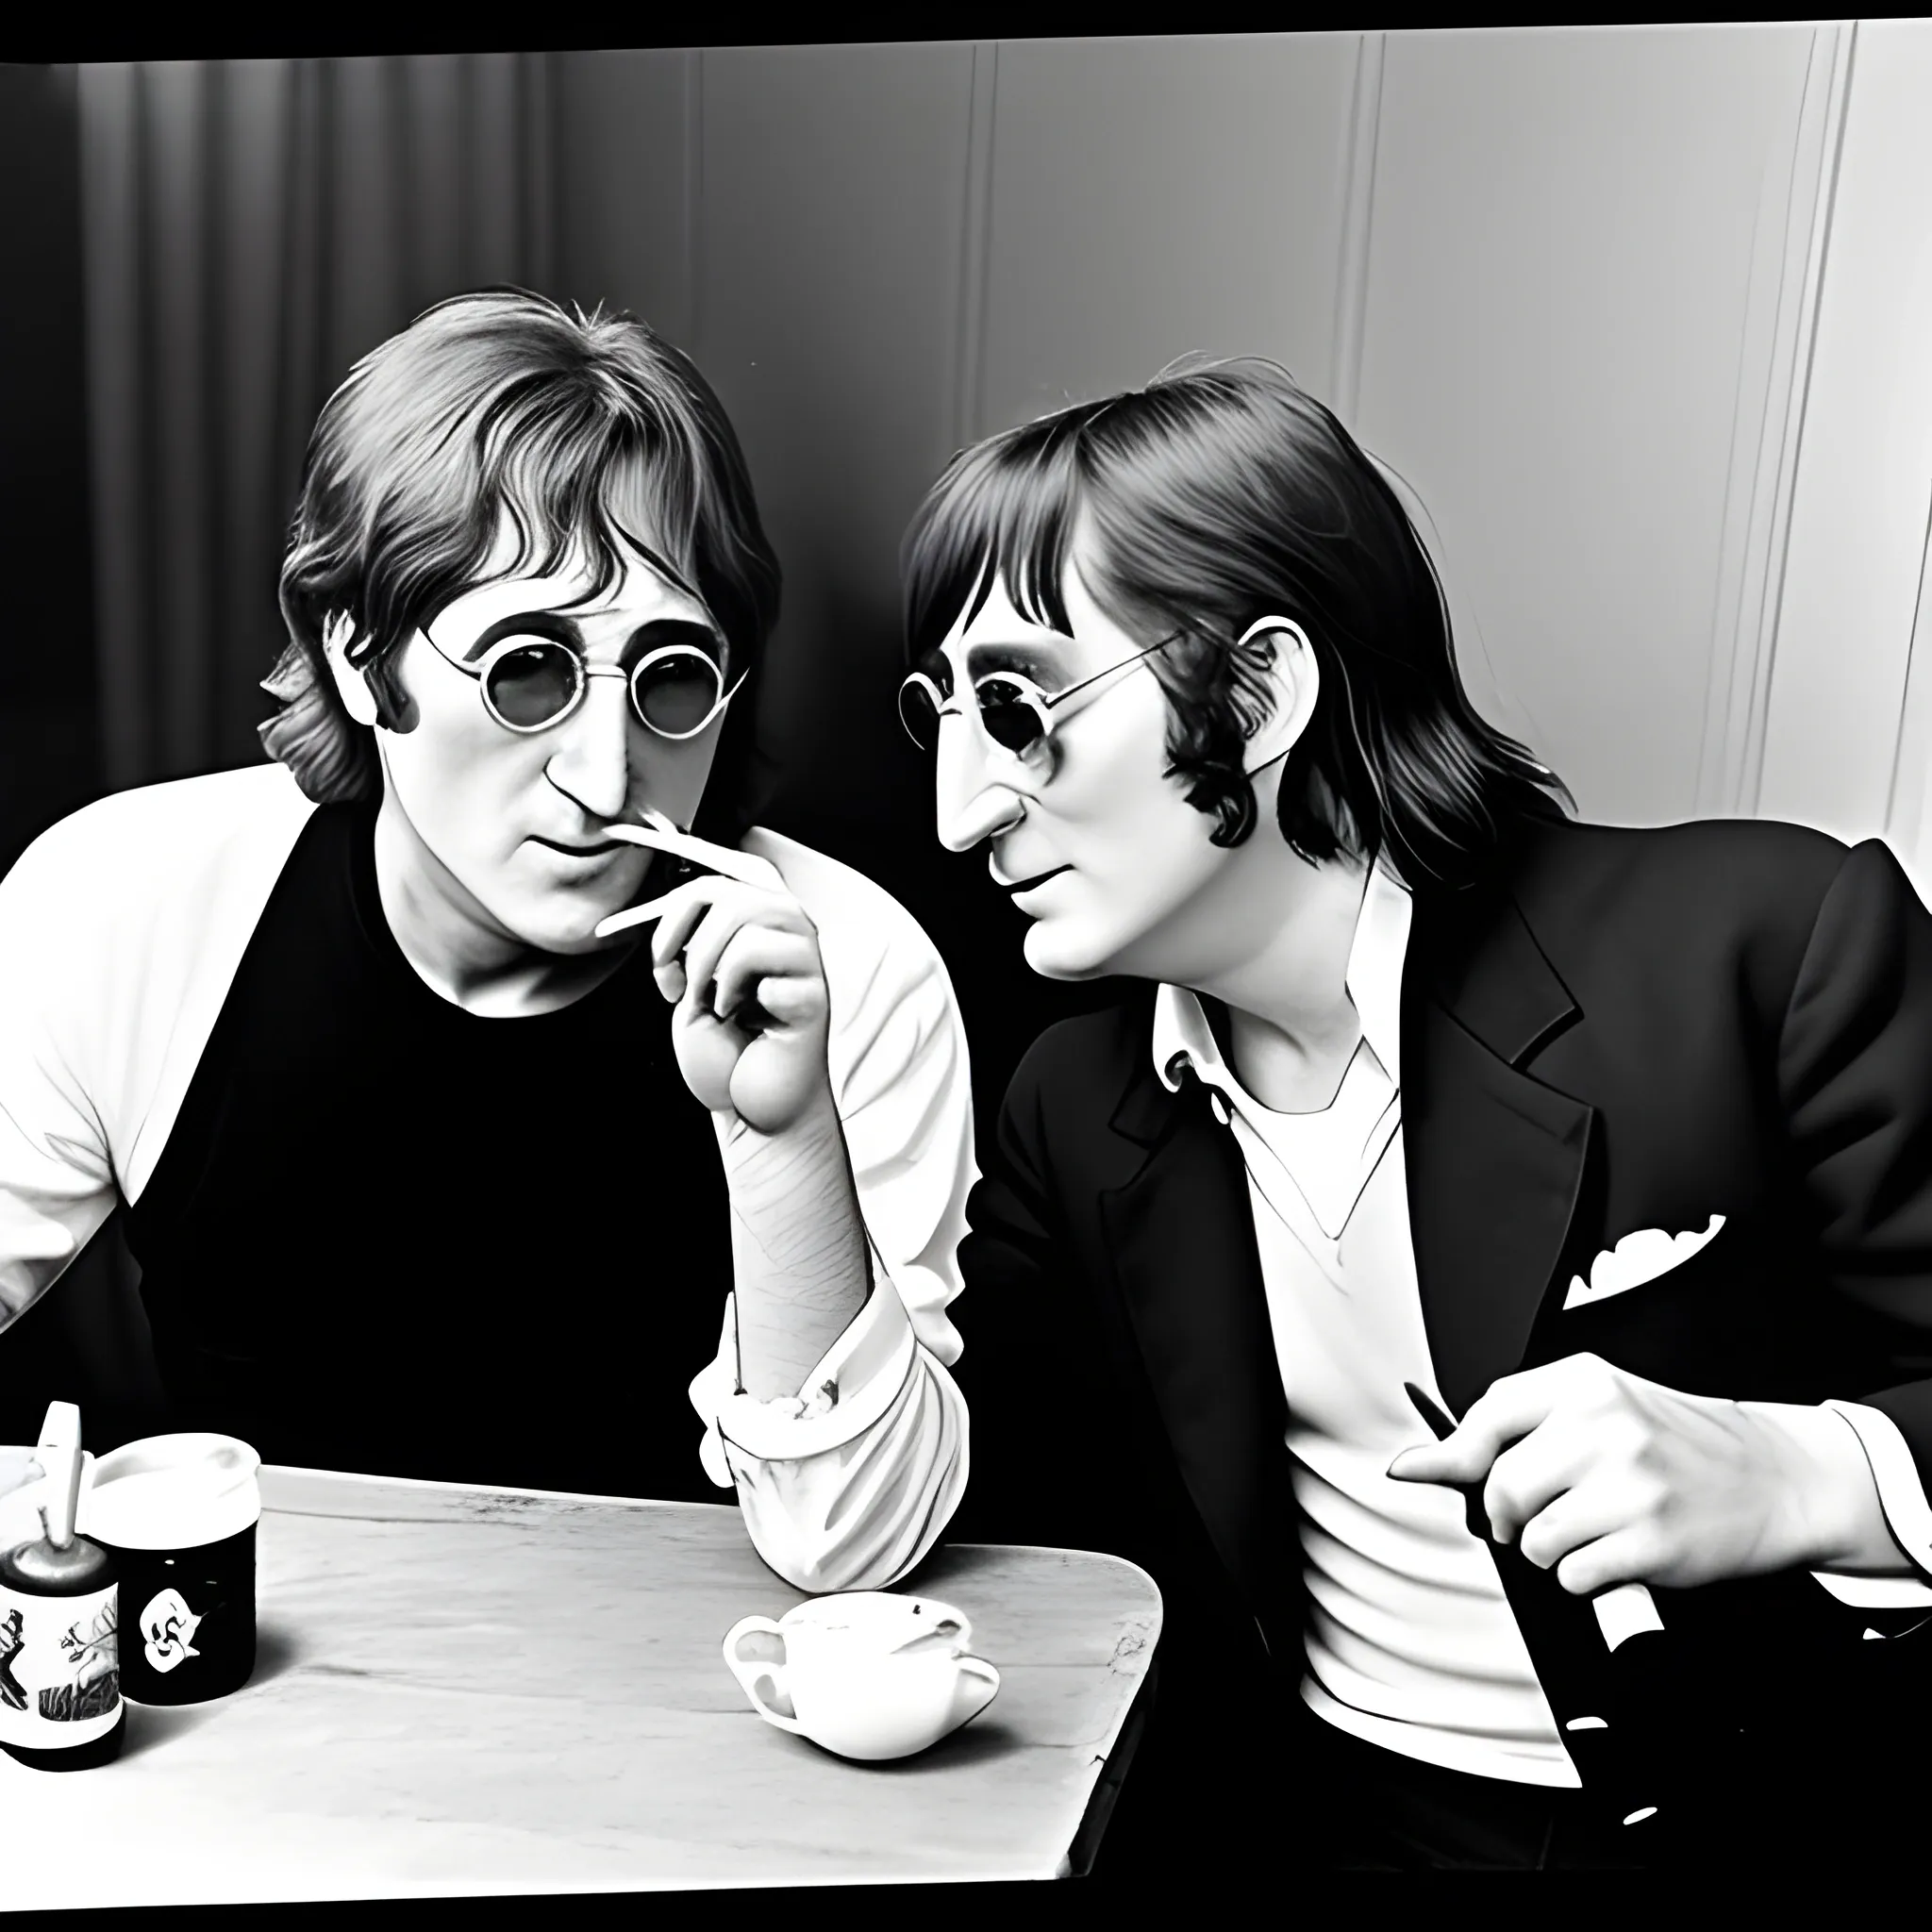 John Lennon & Knuckles smoking a joint